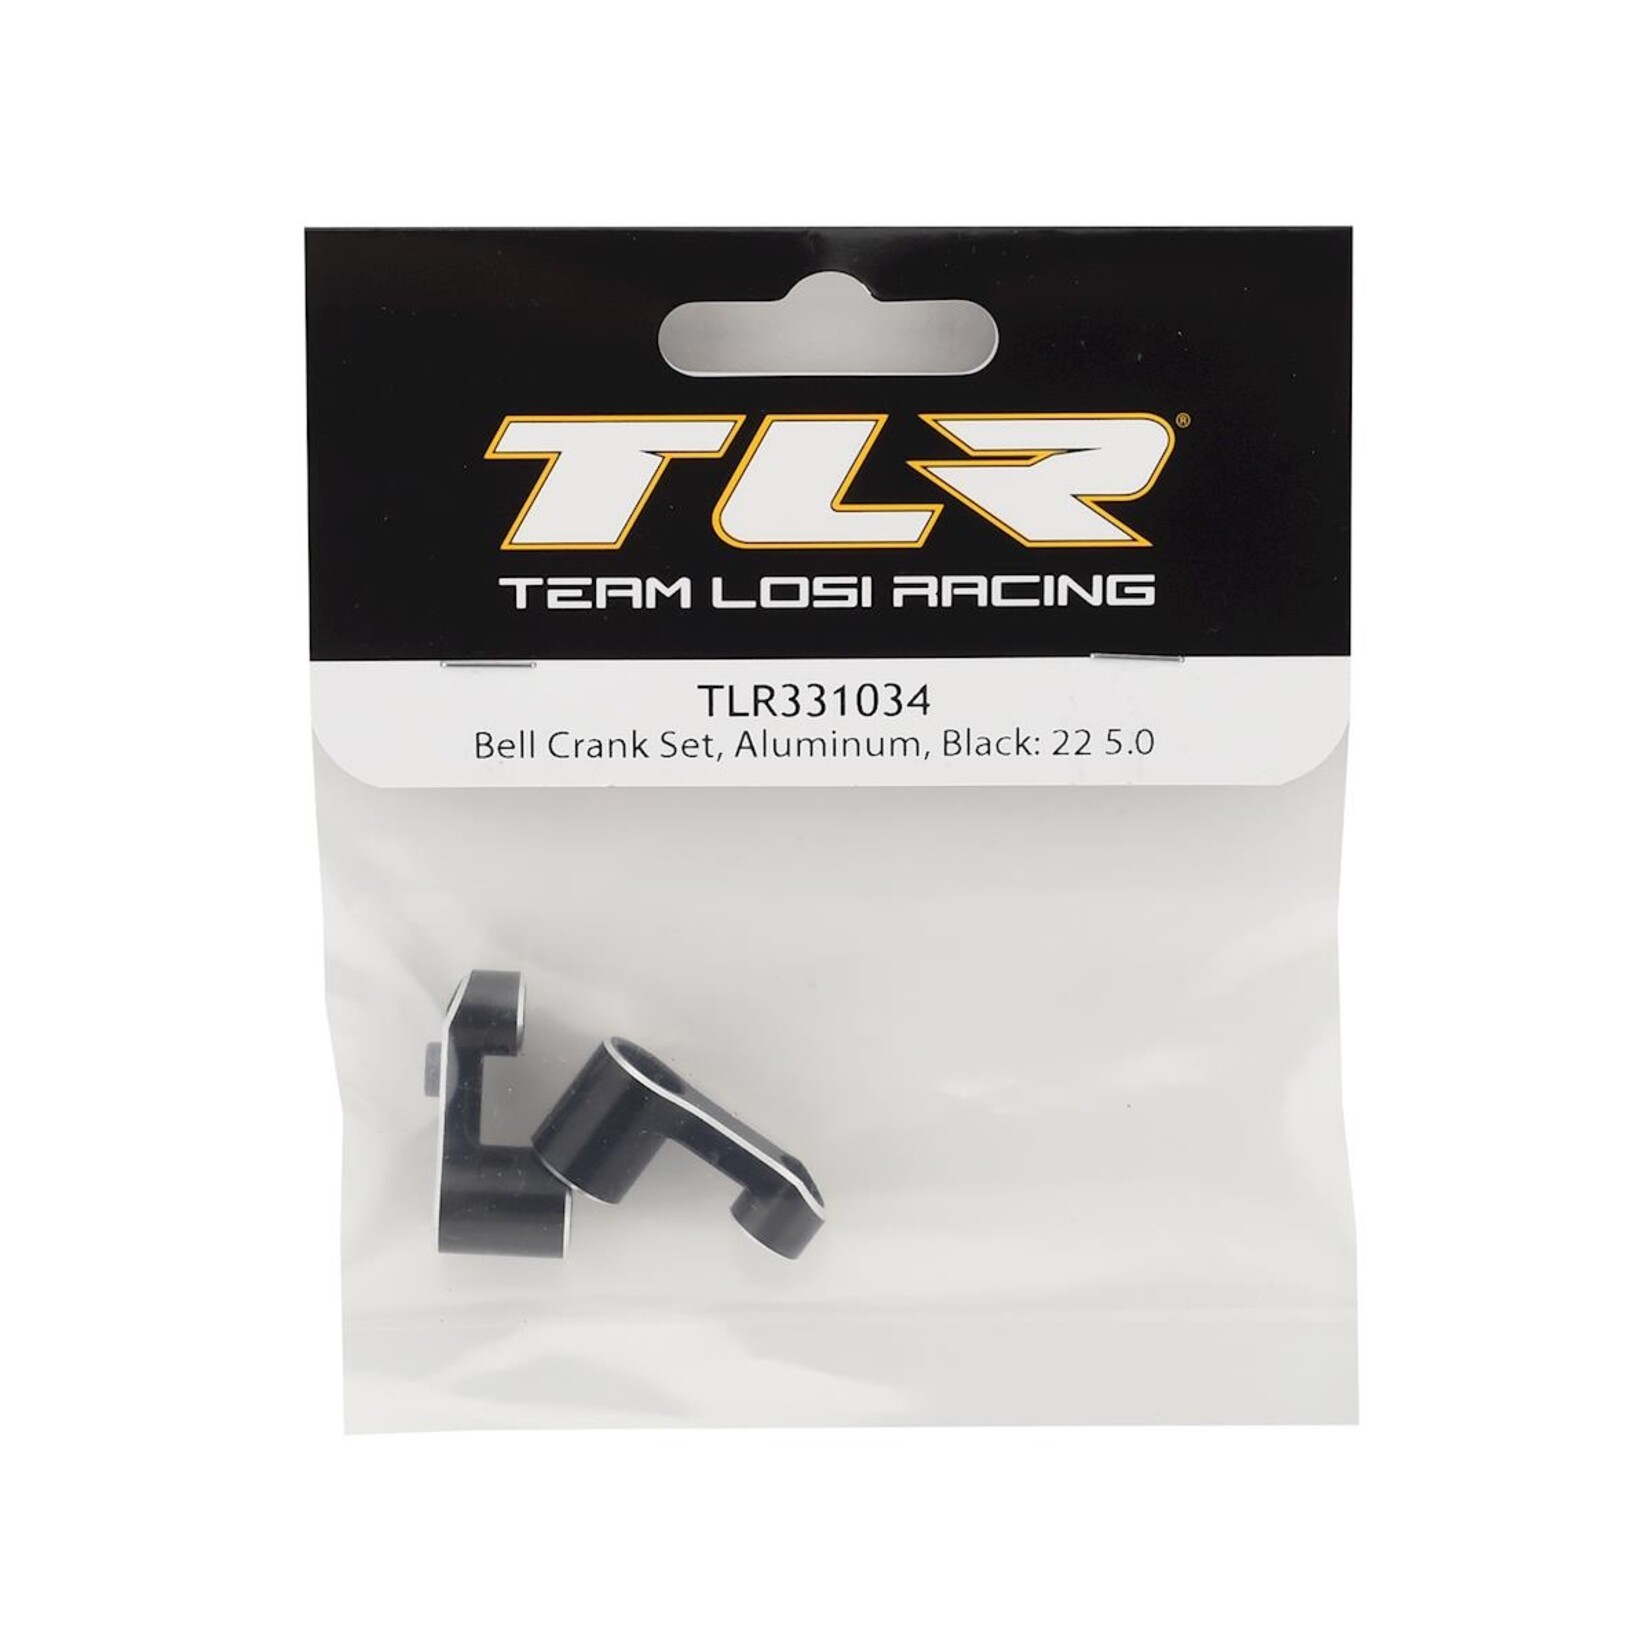 TLR Team Losi Racing 22 5.0 Aluminum Bell Crank Set (Black) (2) #TLR331034